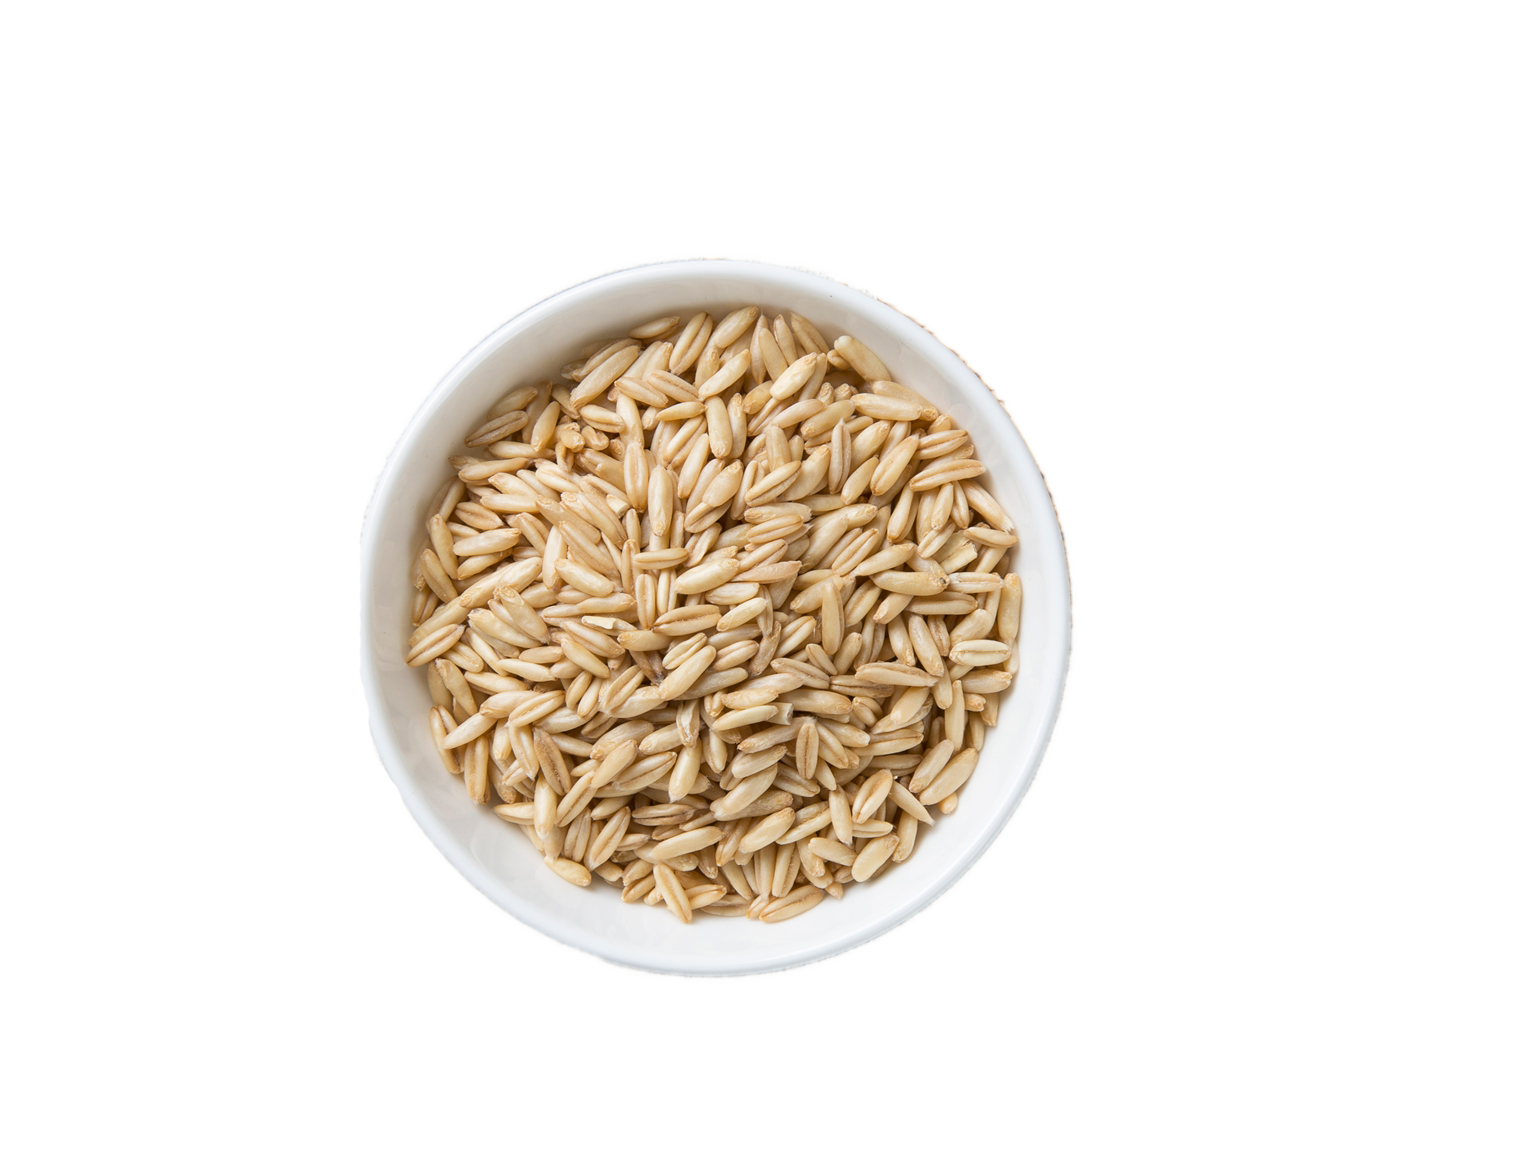 Pngtreea bowl of wheat 4483634